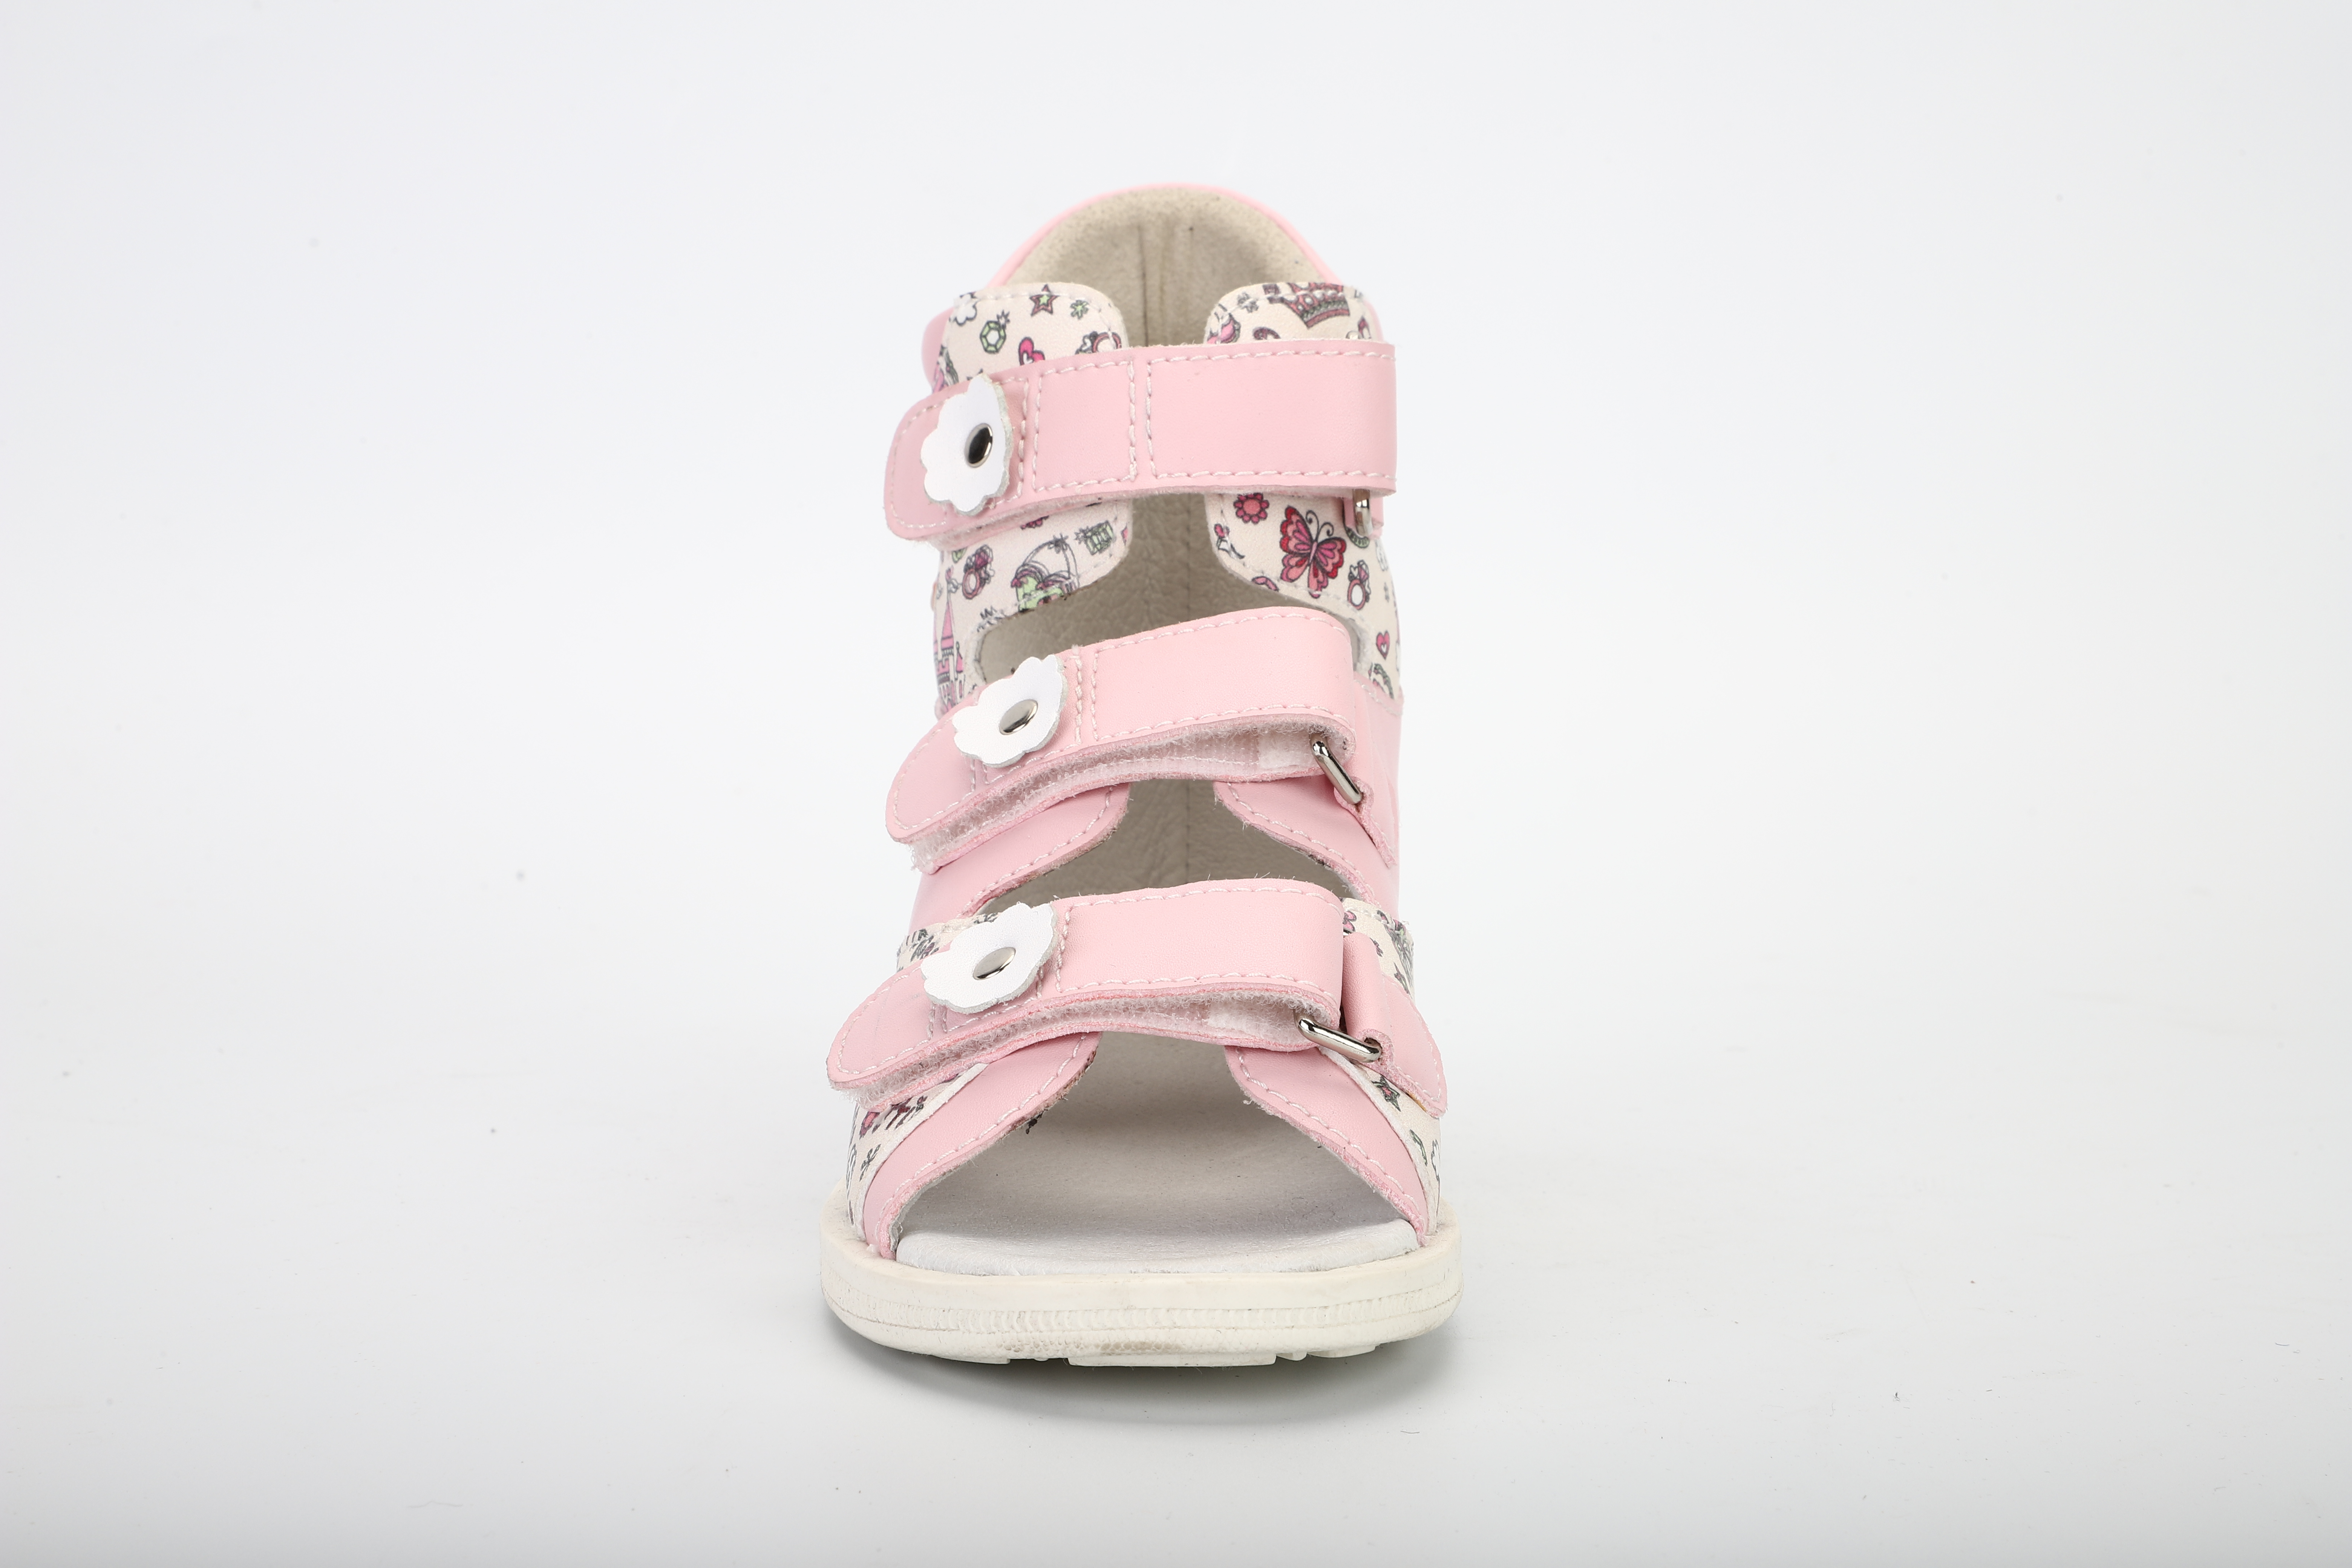 Leather Comfort Medical Shoes For Children,Children's Orthopedic Sandals For Tiptoe